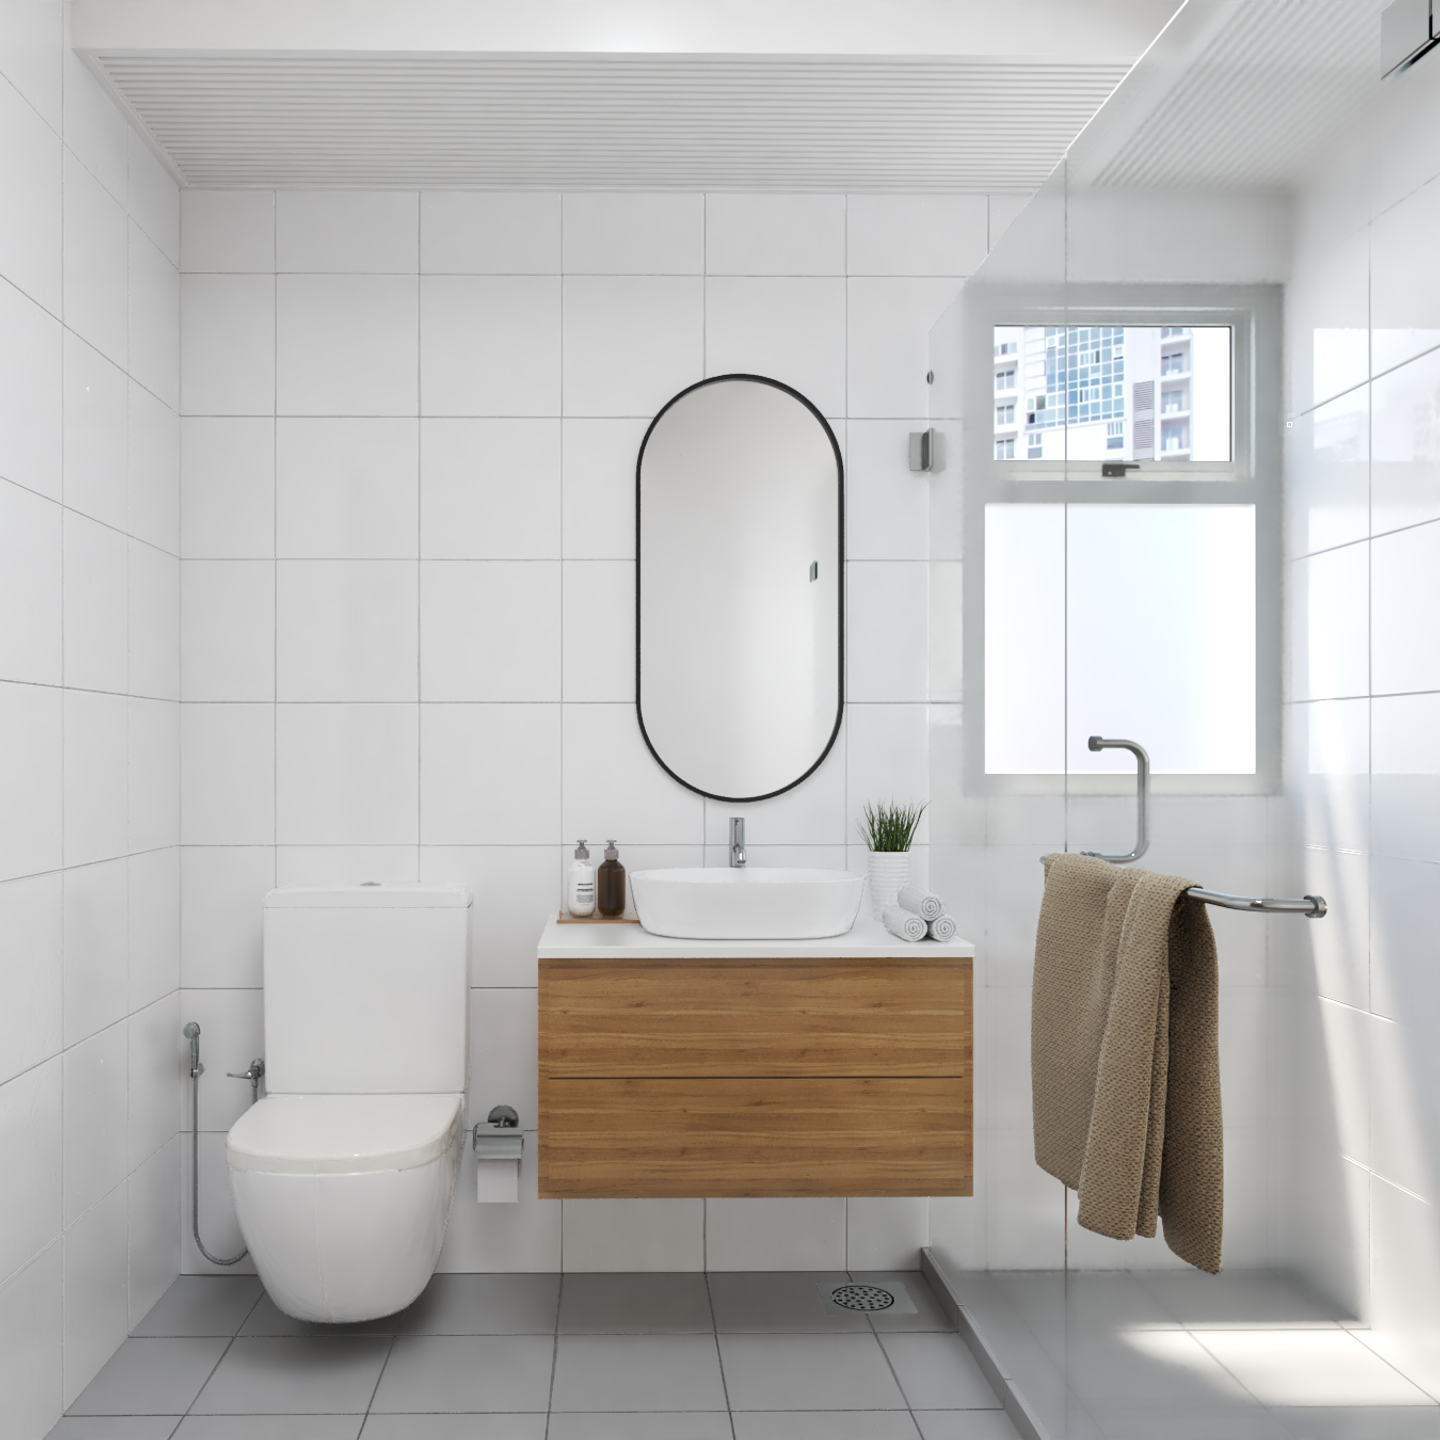 Compact Contemporary Bathroom Design with Oval Mirror - Livspace